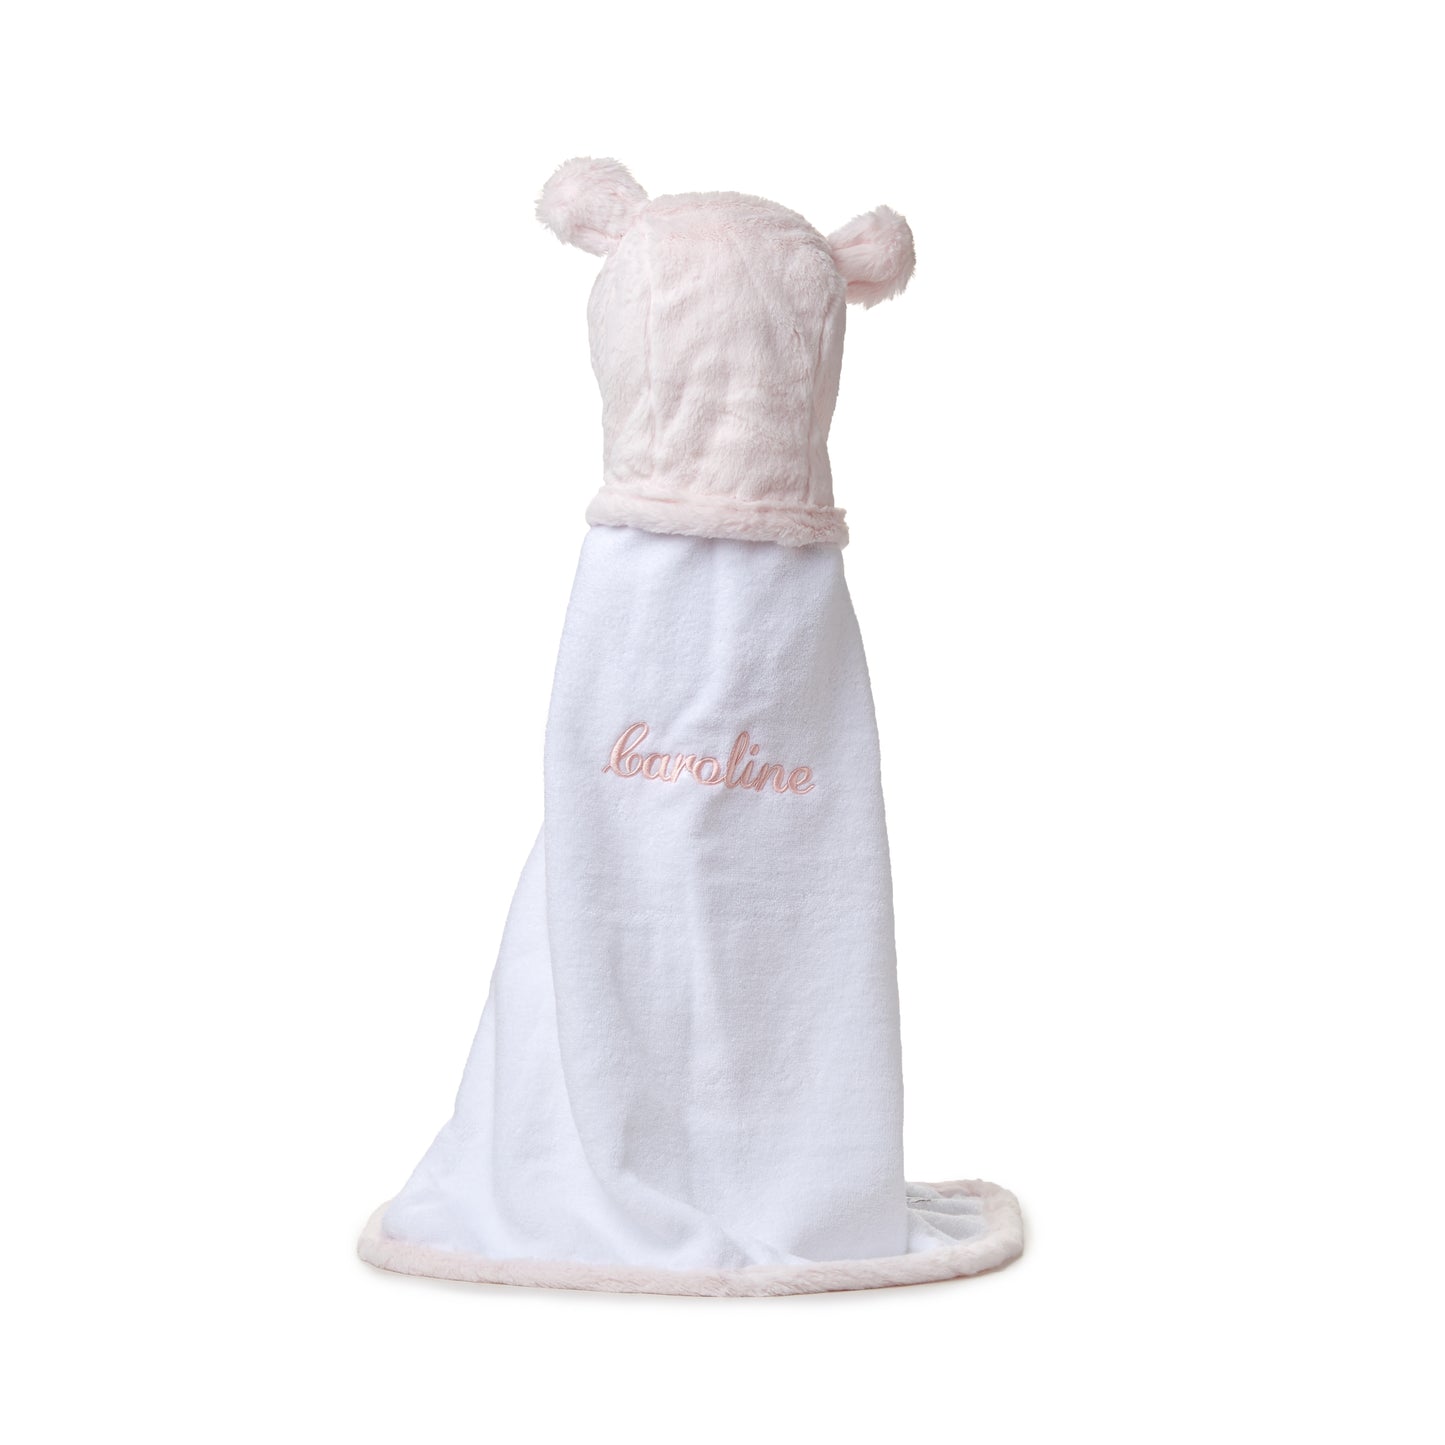 Luxe Hooded Towel